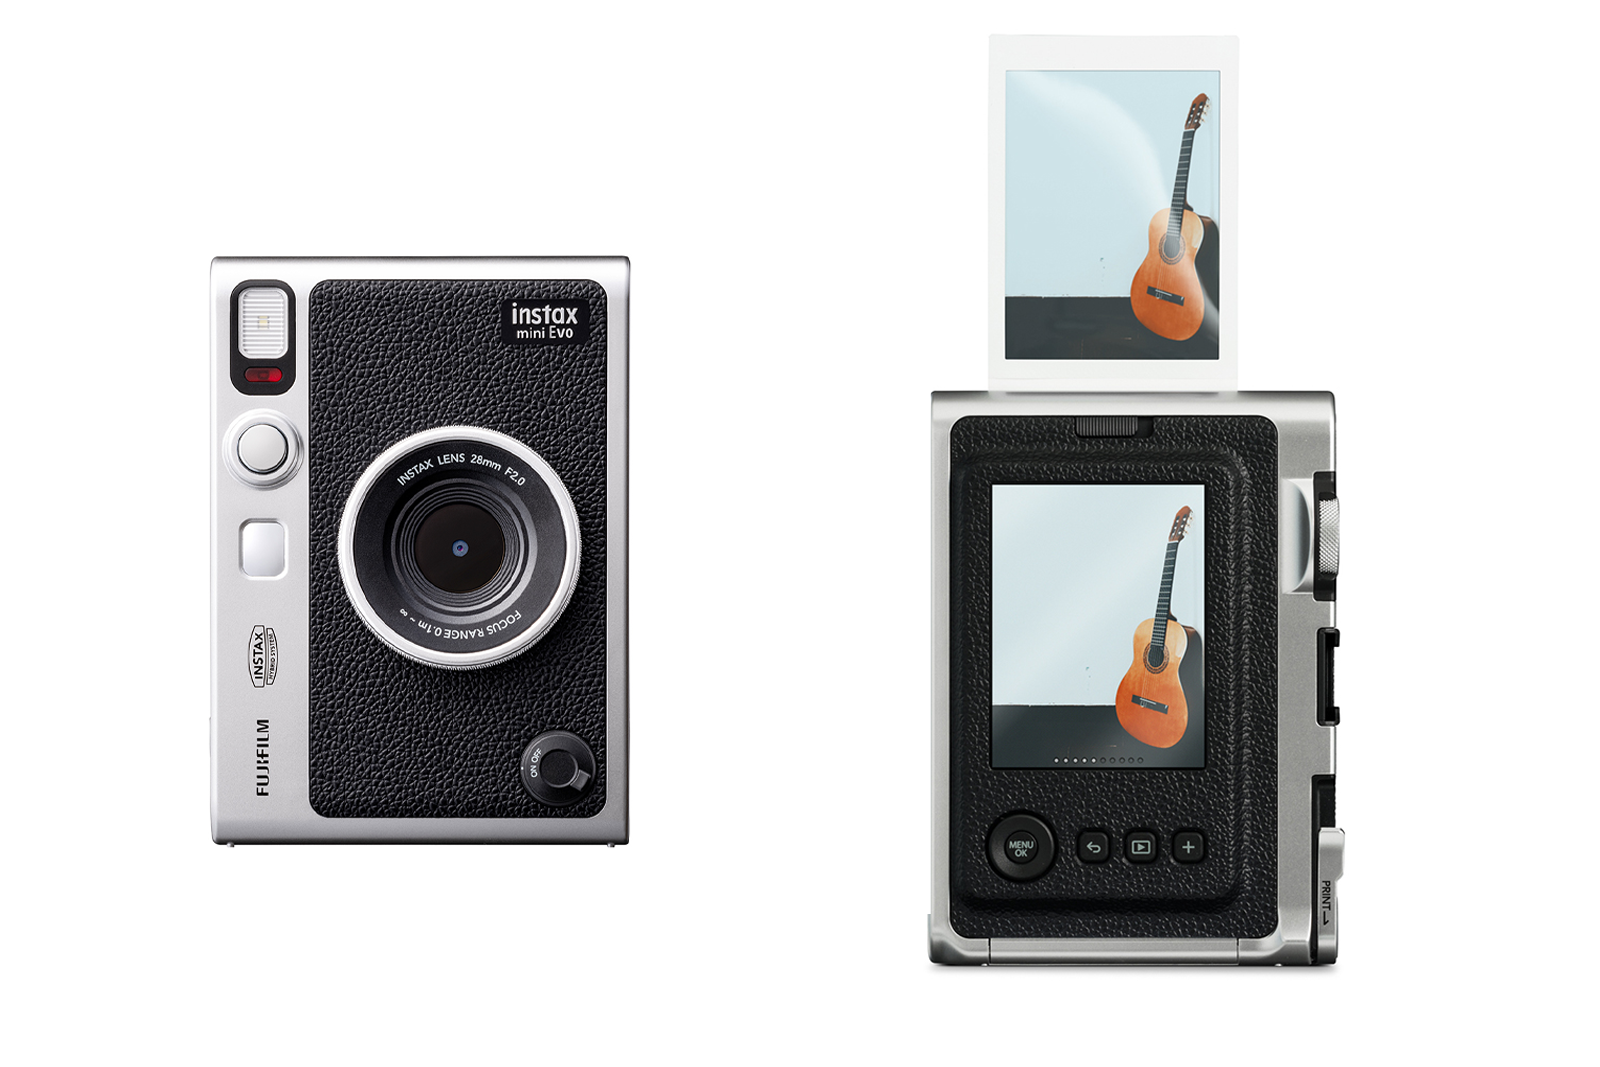 Fujifilm Instax Mini Evo camera combines digital and film